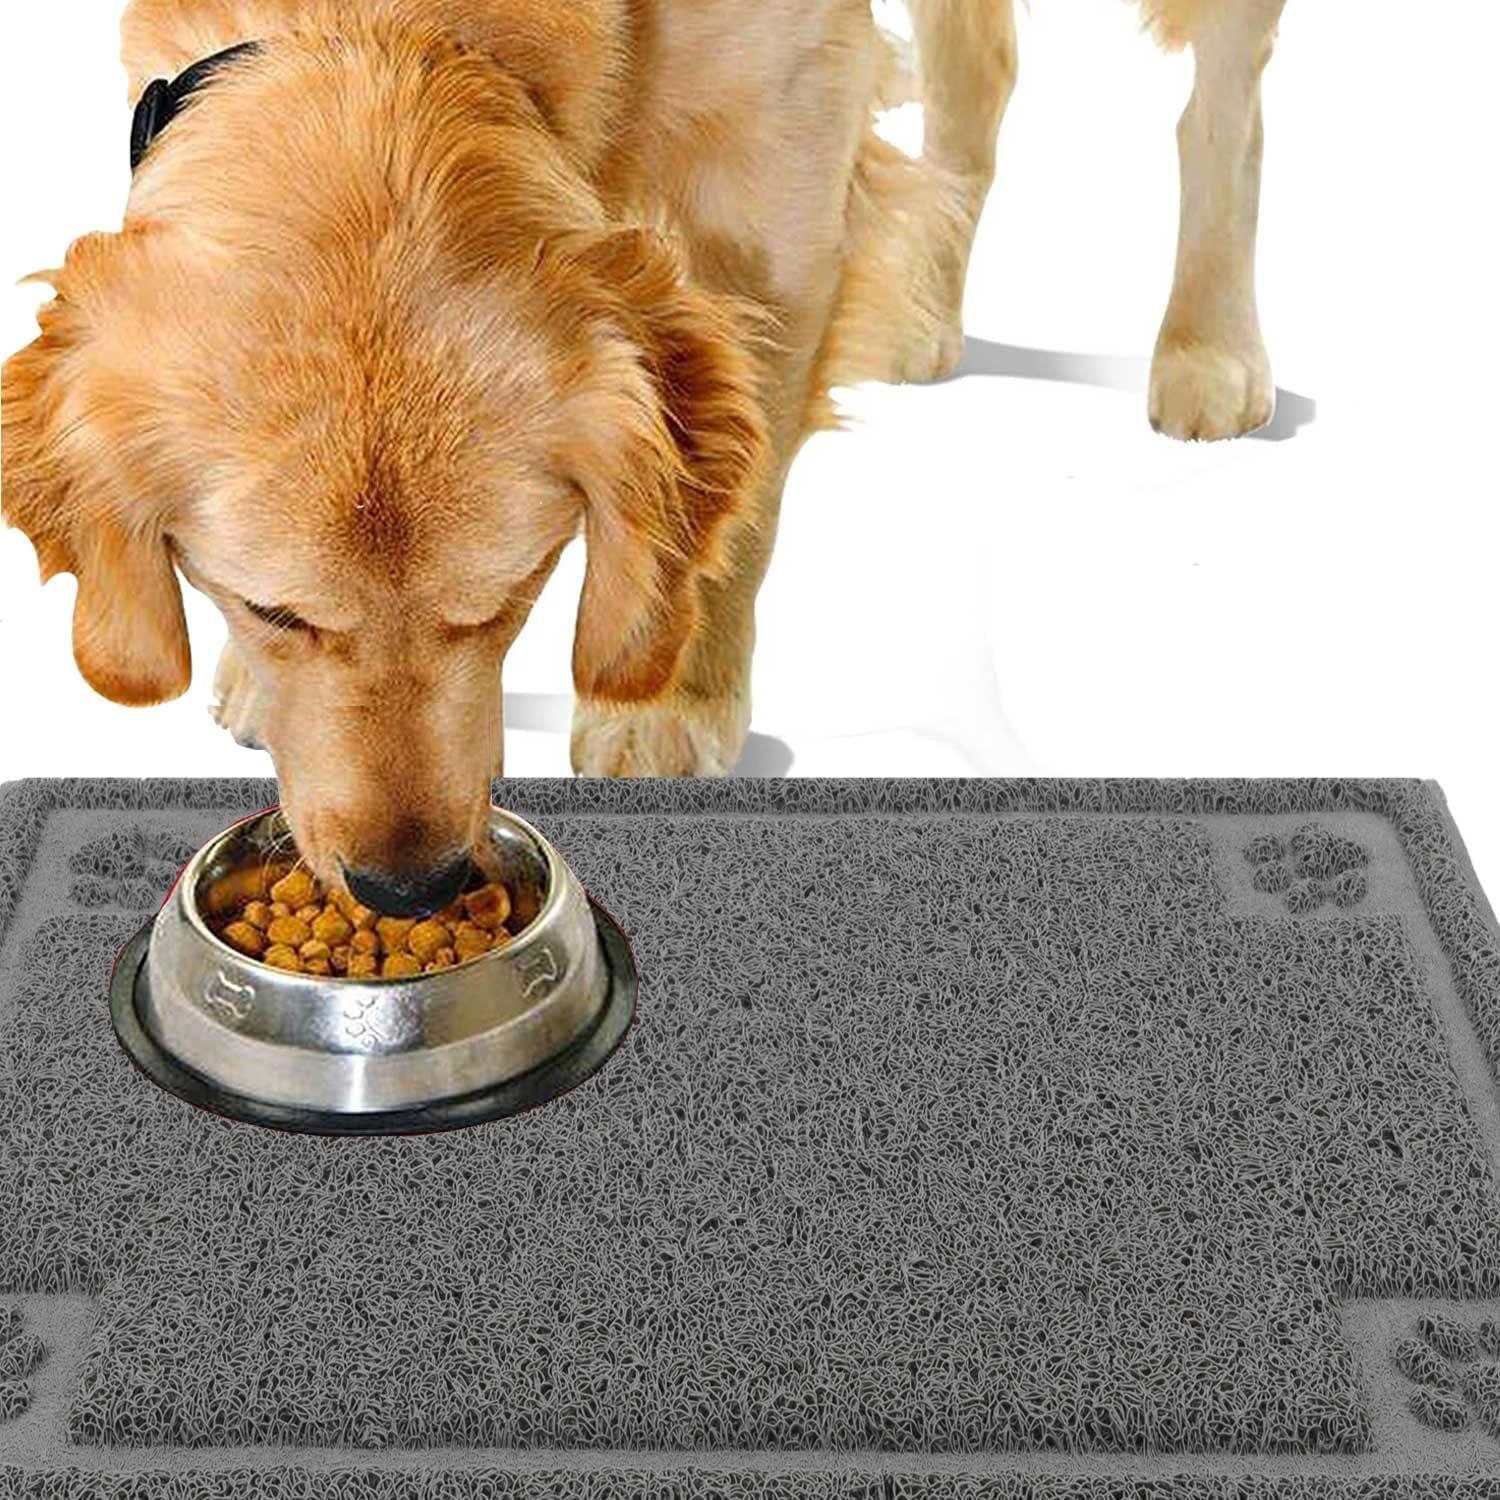 10 Best Dog Water & Food Bowl Mats – 2023 Reviews & Top Picks